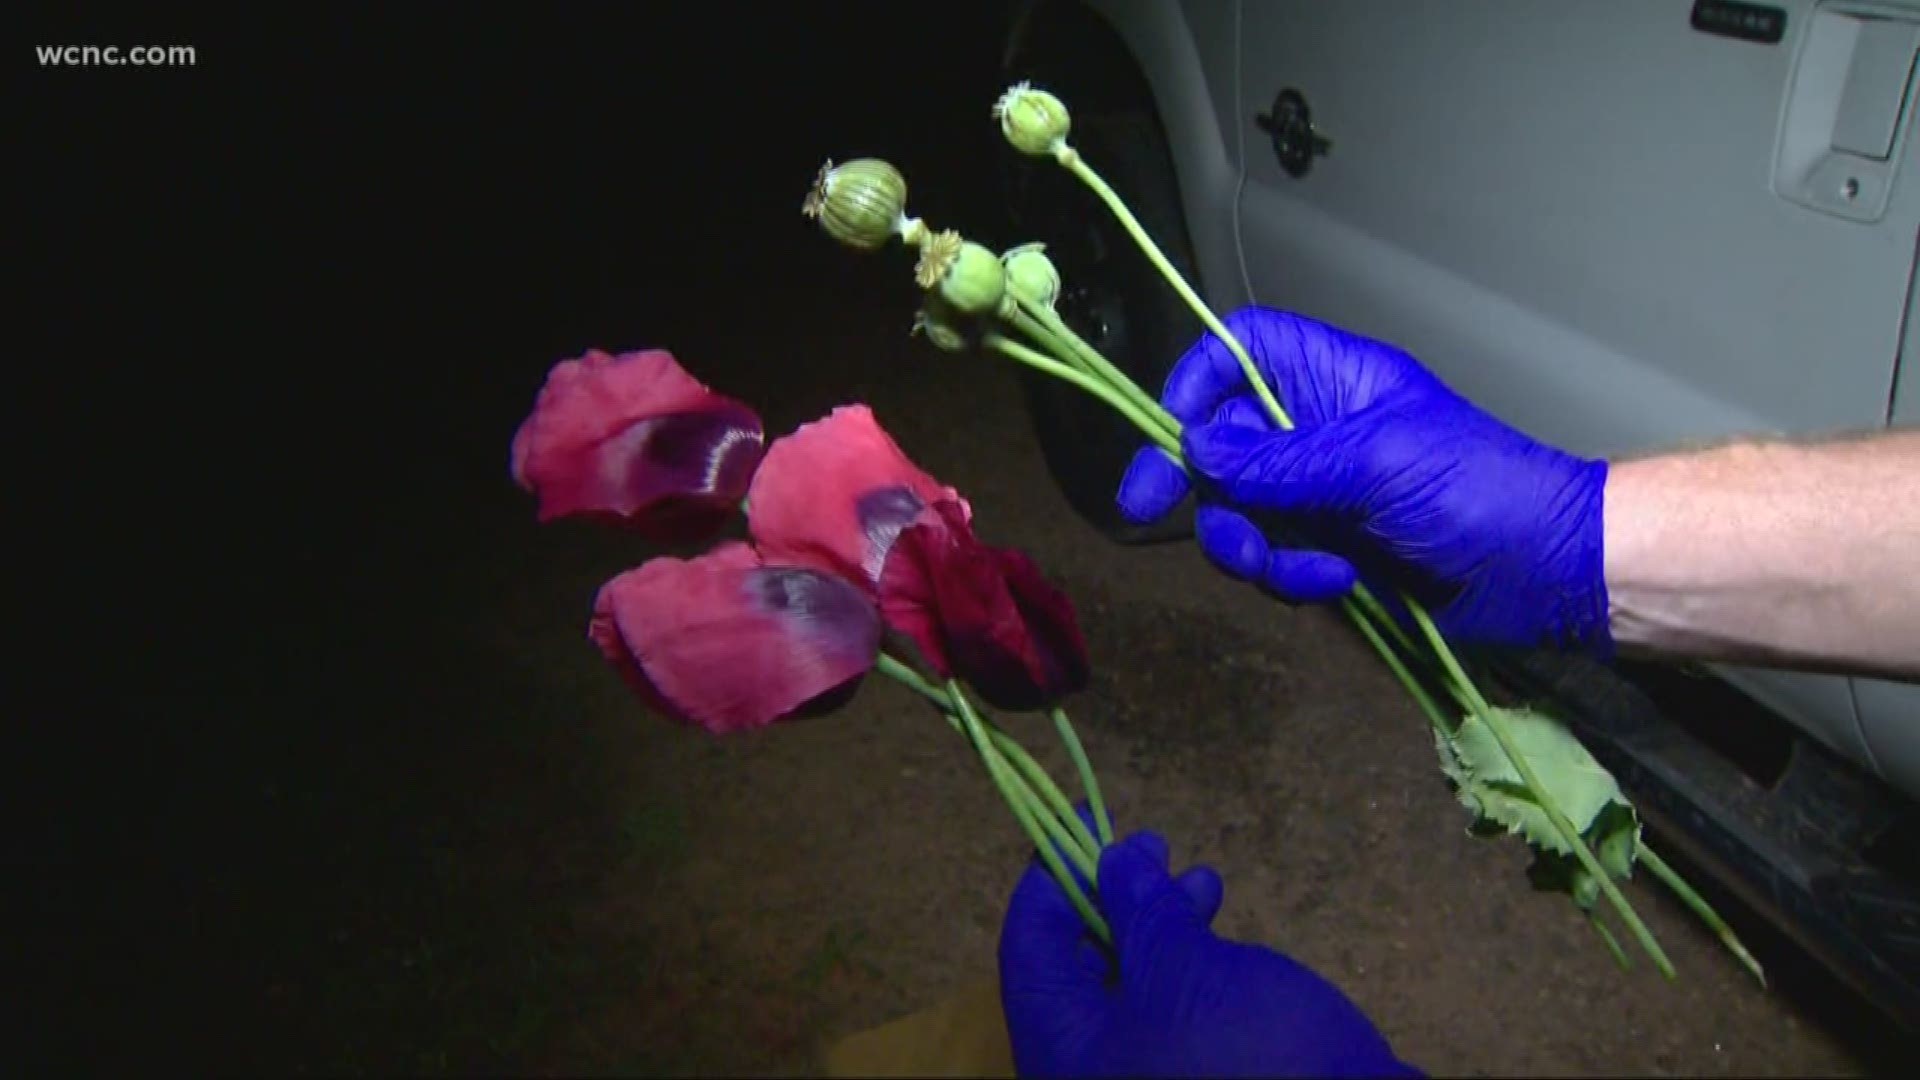 Illegal poppy plants found in Alexander County